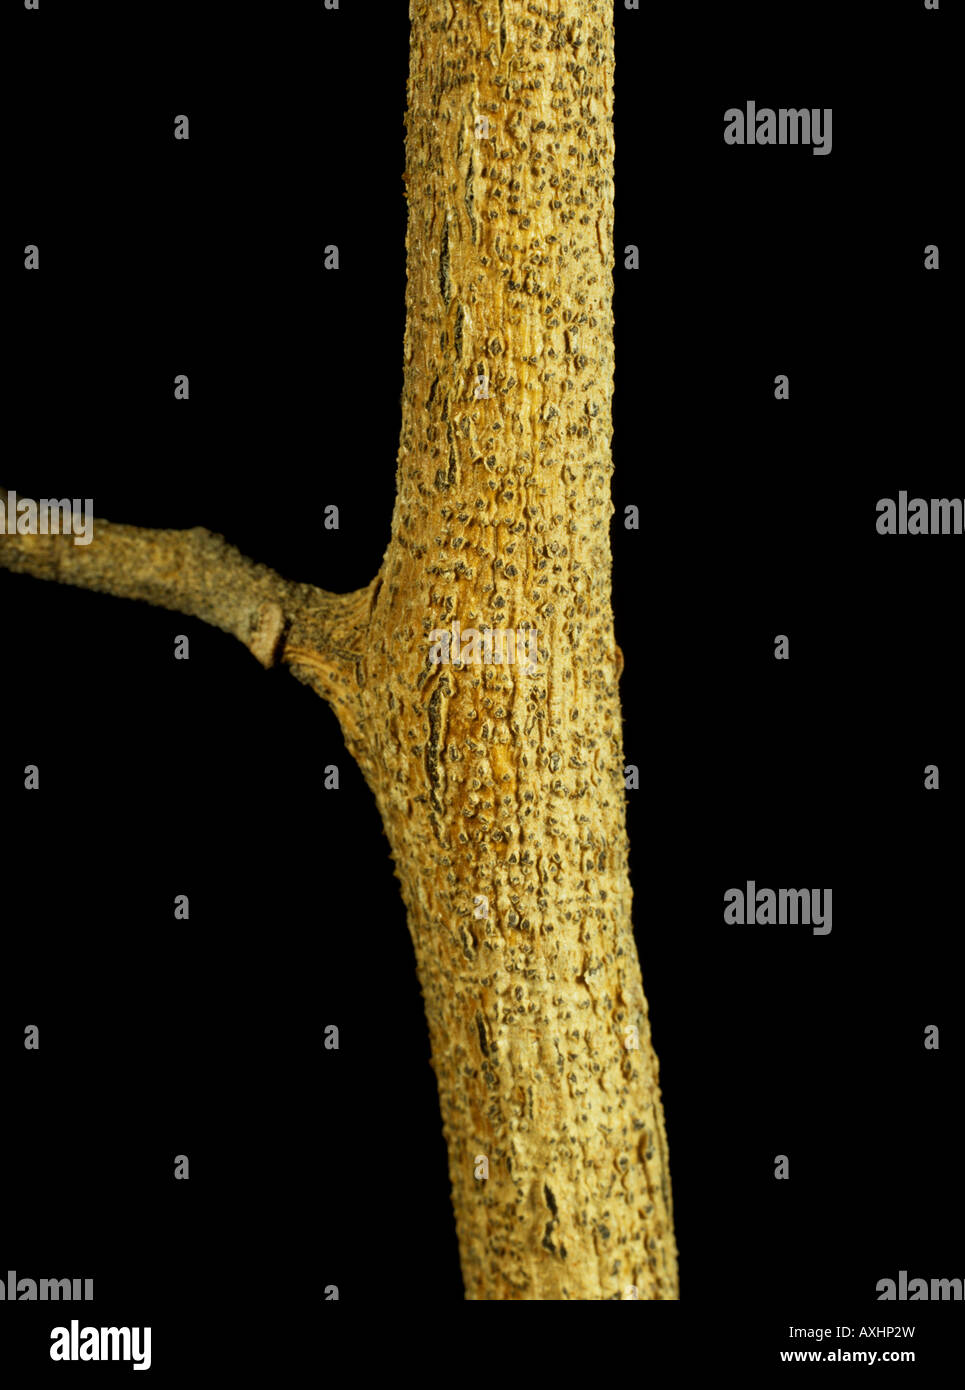 Stem blight Phomopsis vexans lesion on an aubergine or eggplant stem Stock Photo